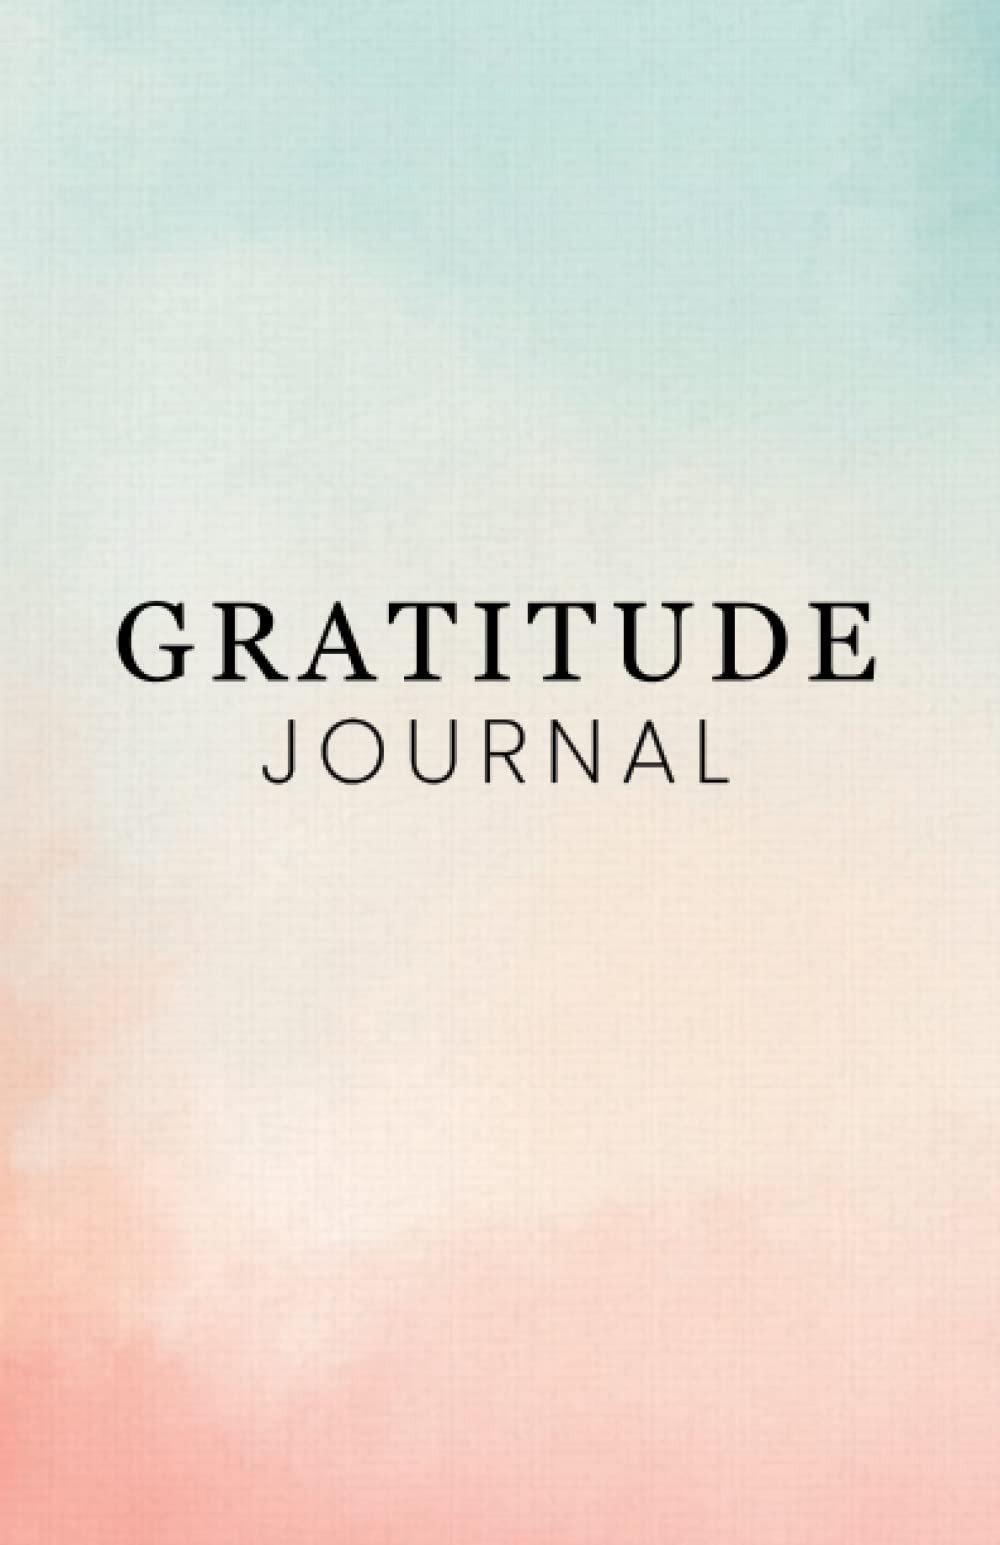 Gratitude Journal - Green and Pink Watercolor.jpg